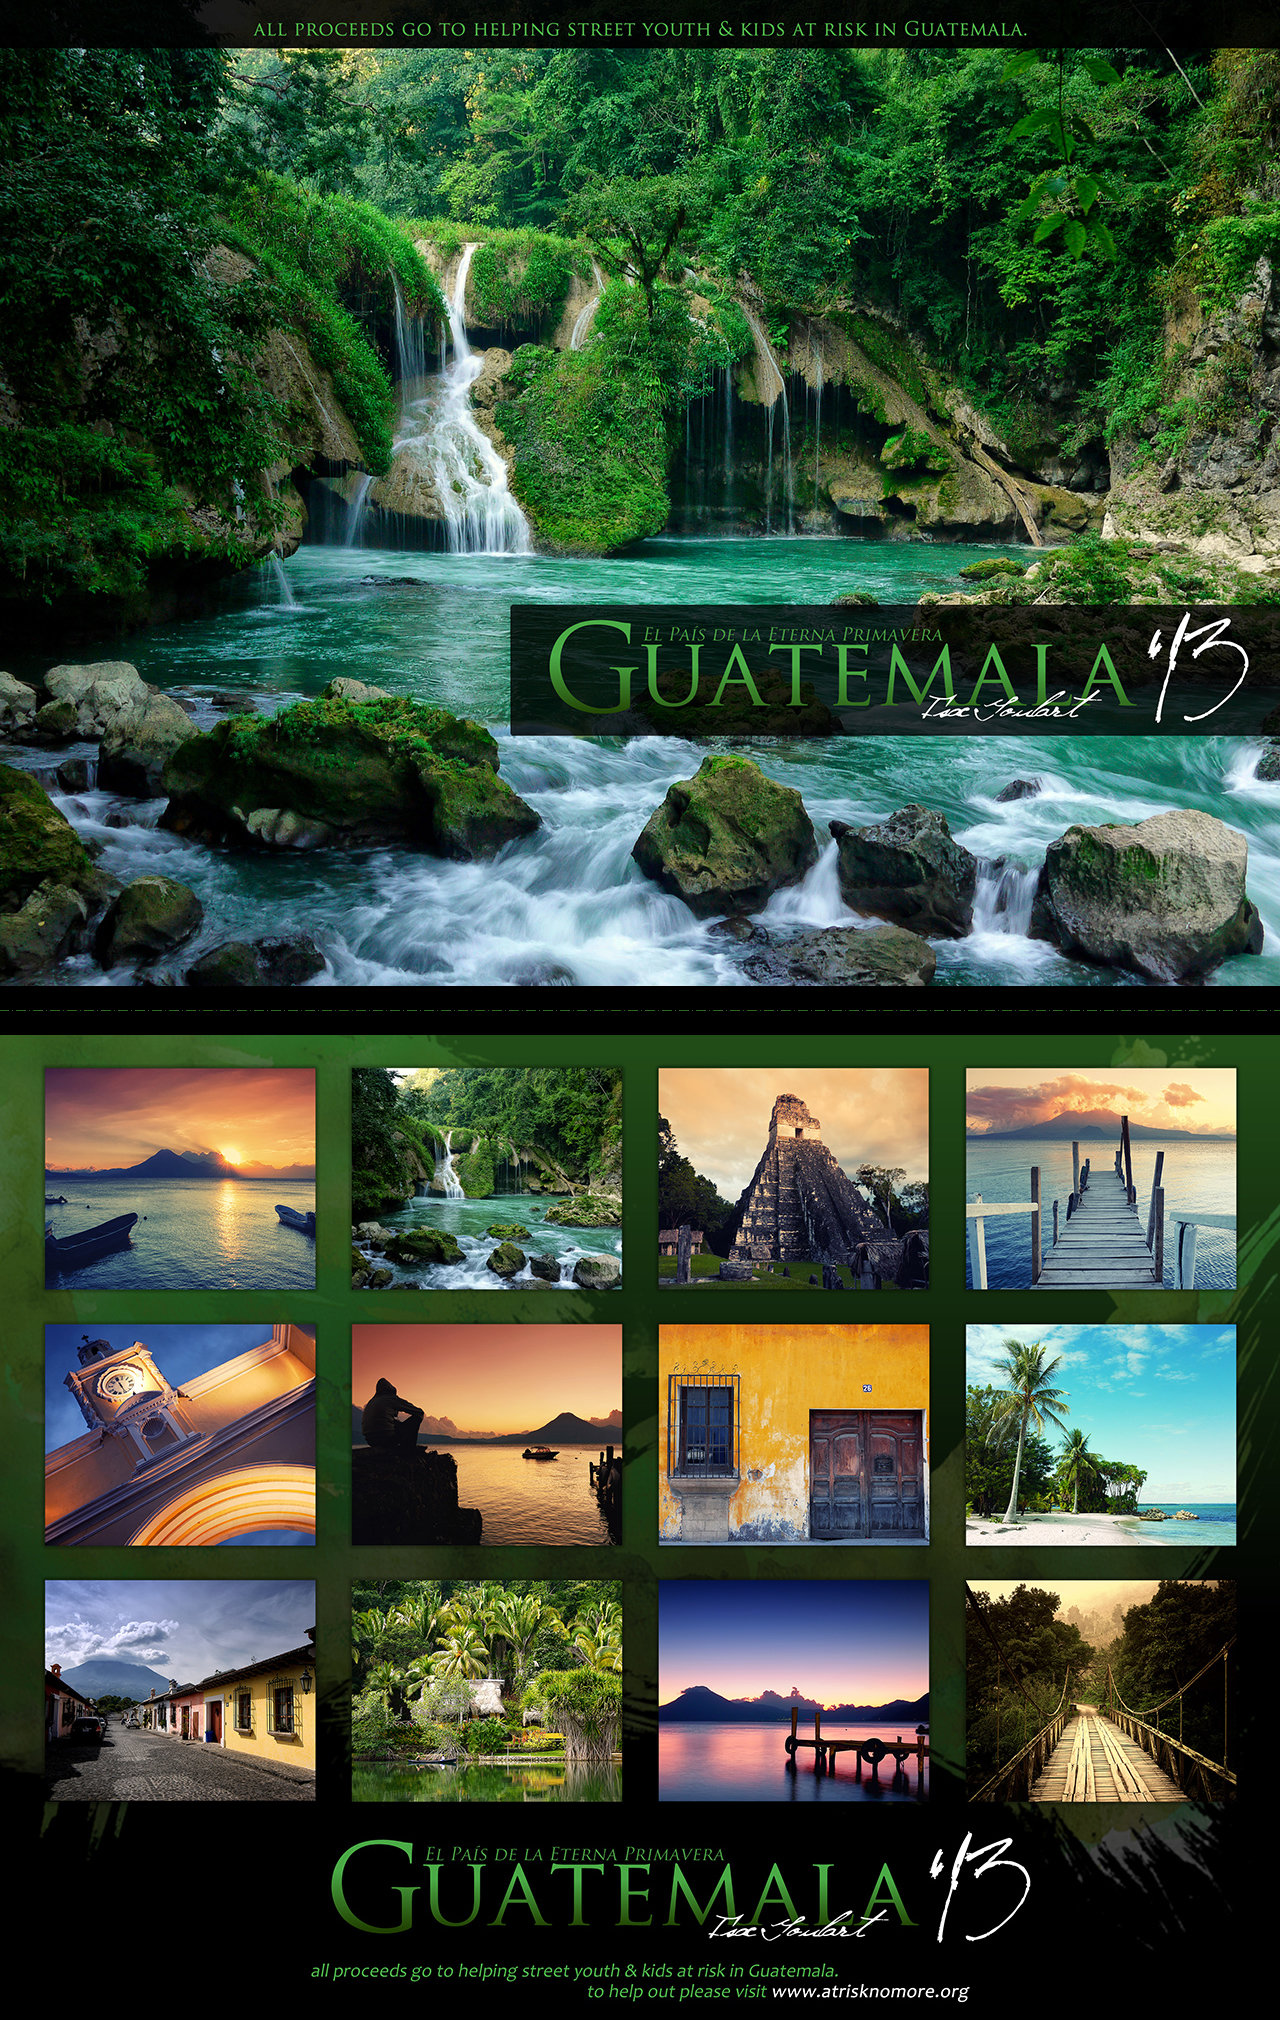 Guatemala 2013 Calendar